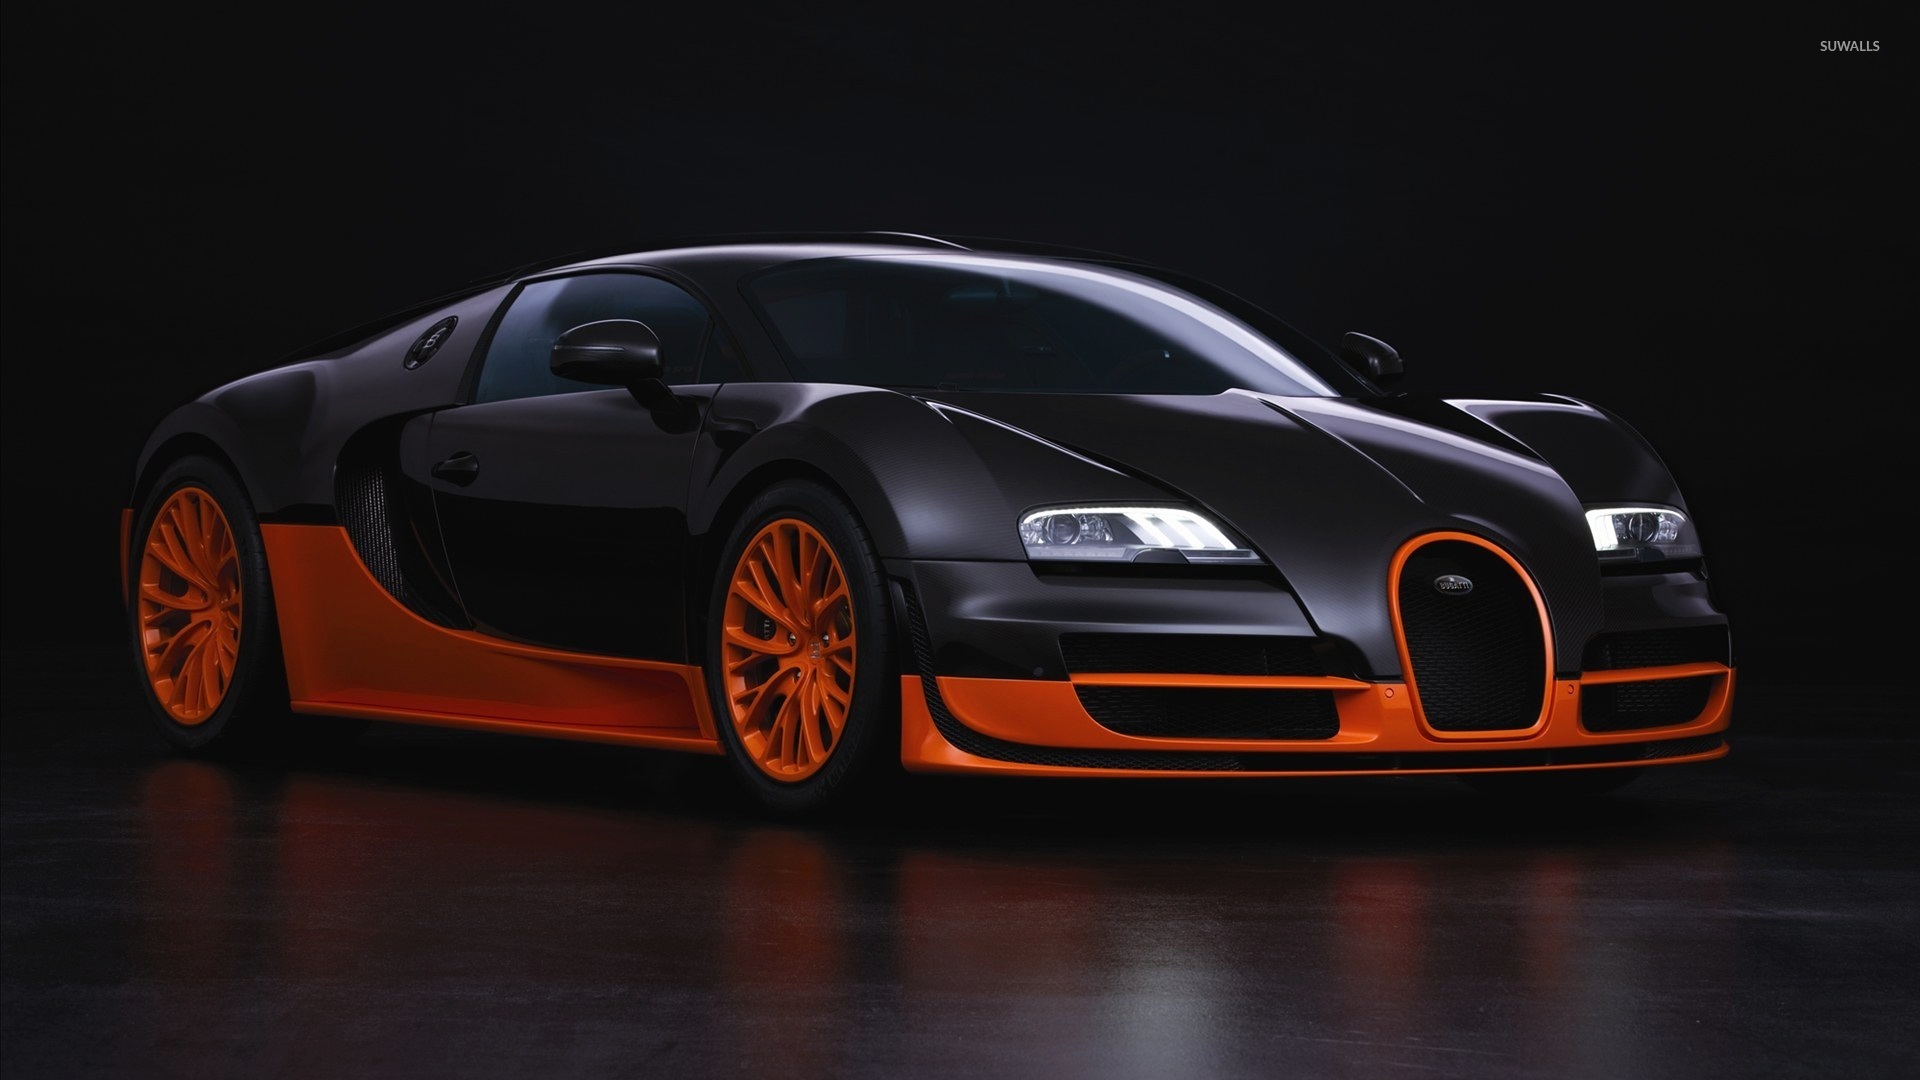 2020 Bugatti Veyron Car Full Hd Wallpapers 1080p